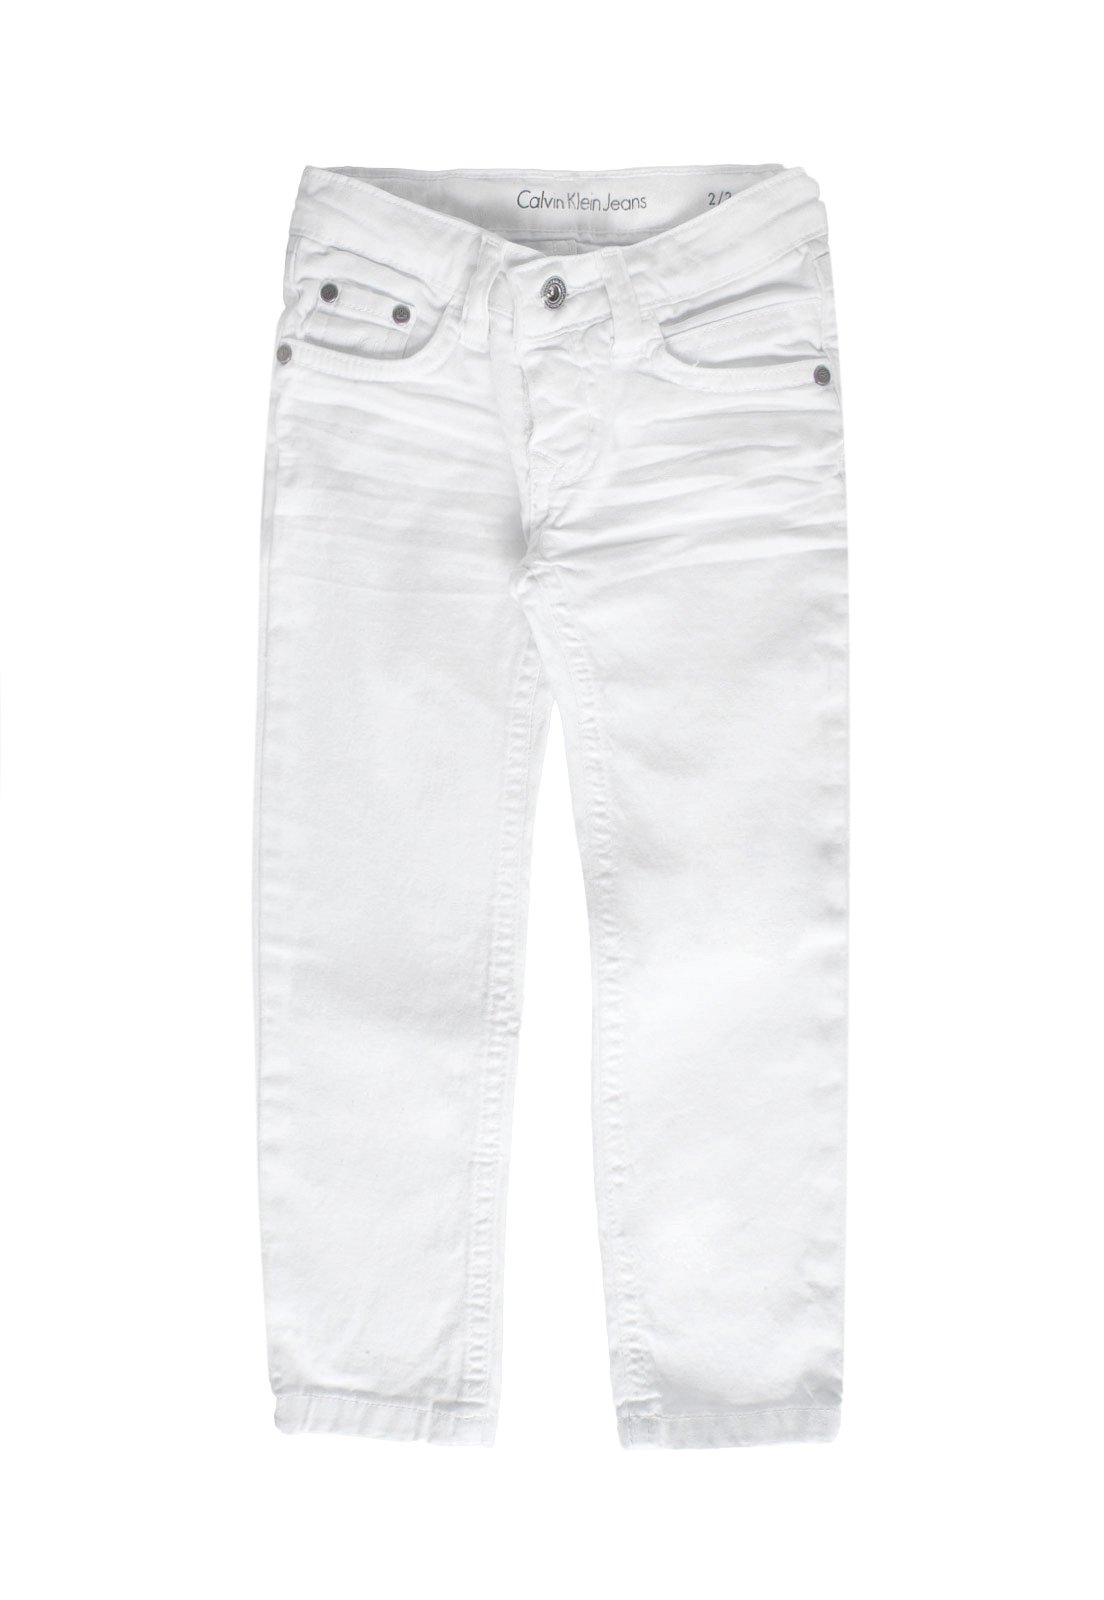 calca jeans branca infantil